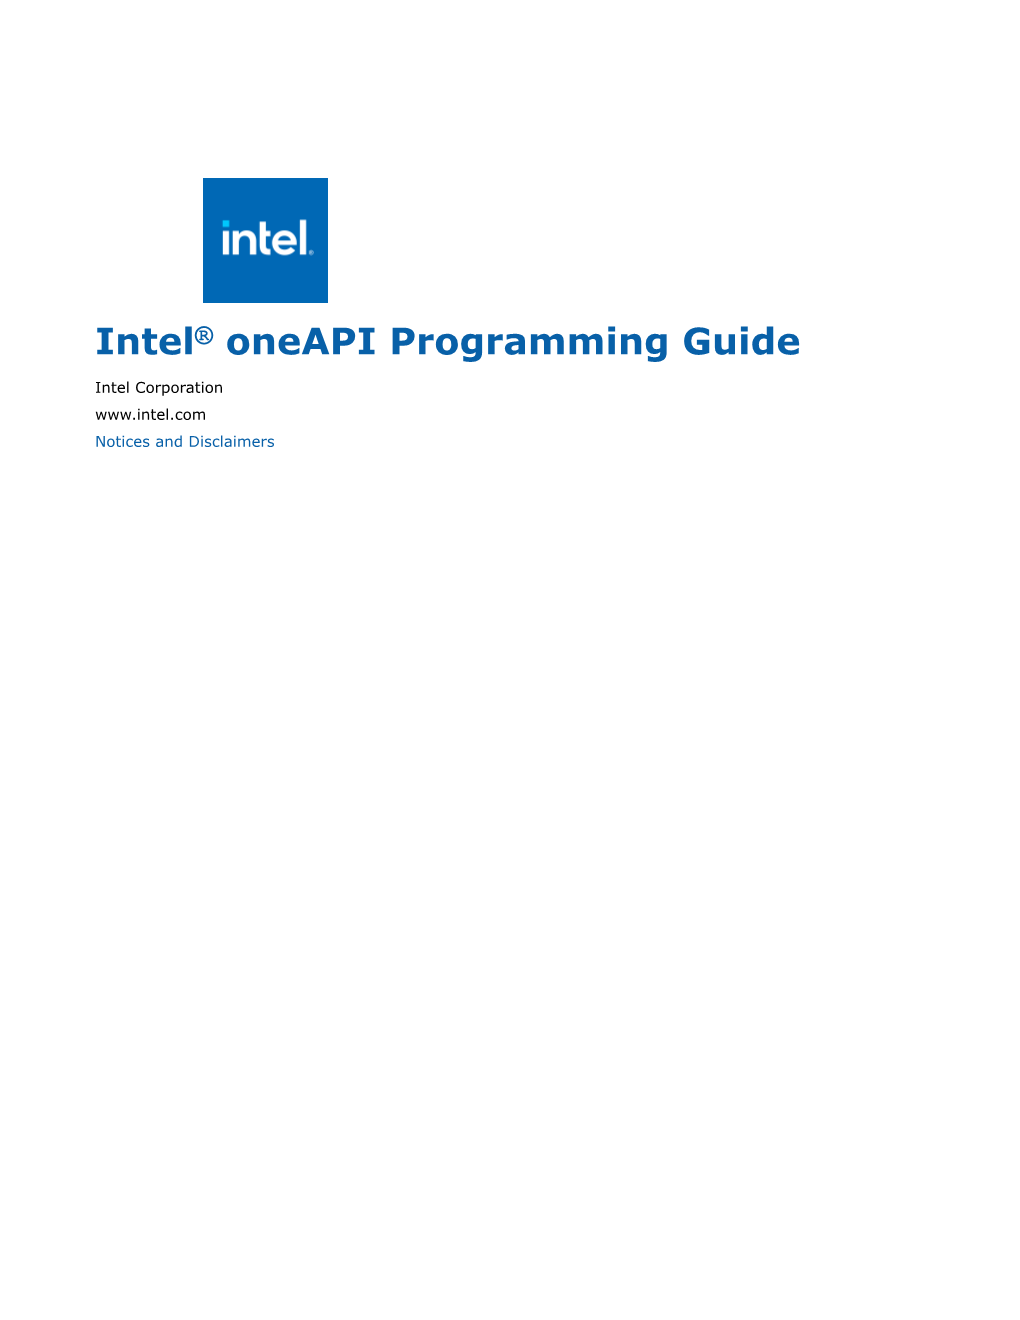 Intel® Oneapi Programming Guide